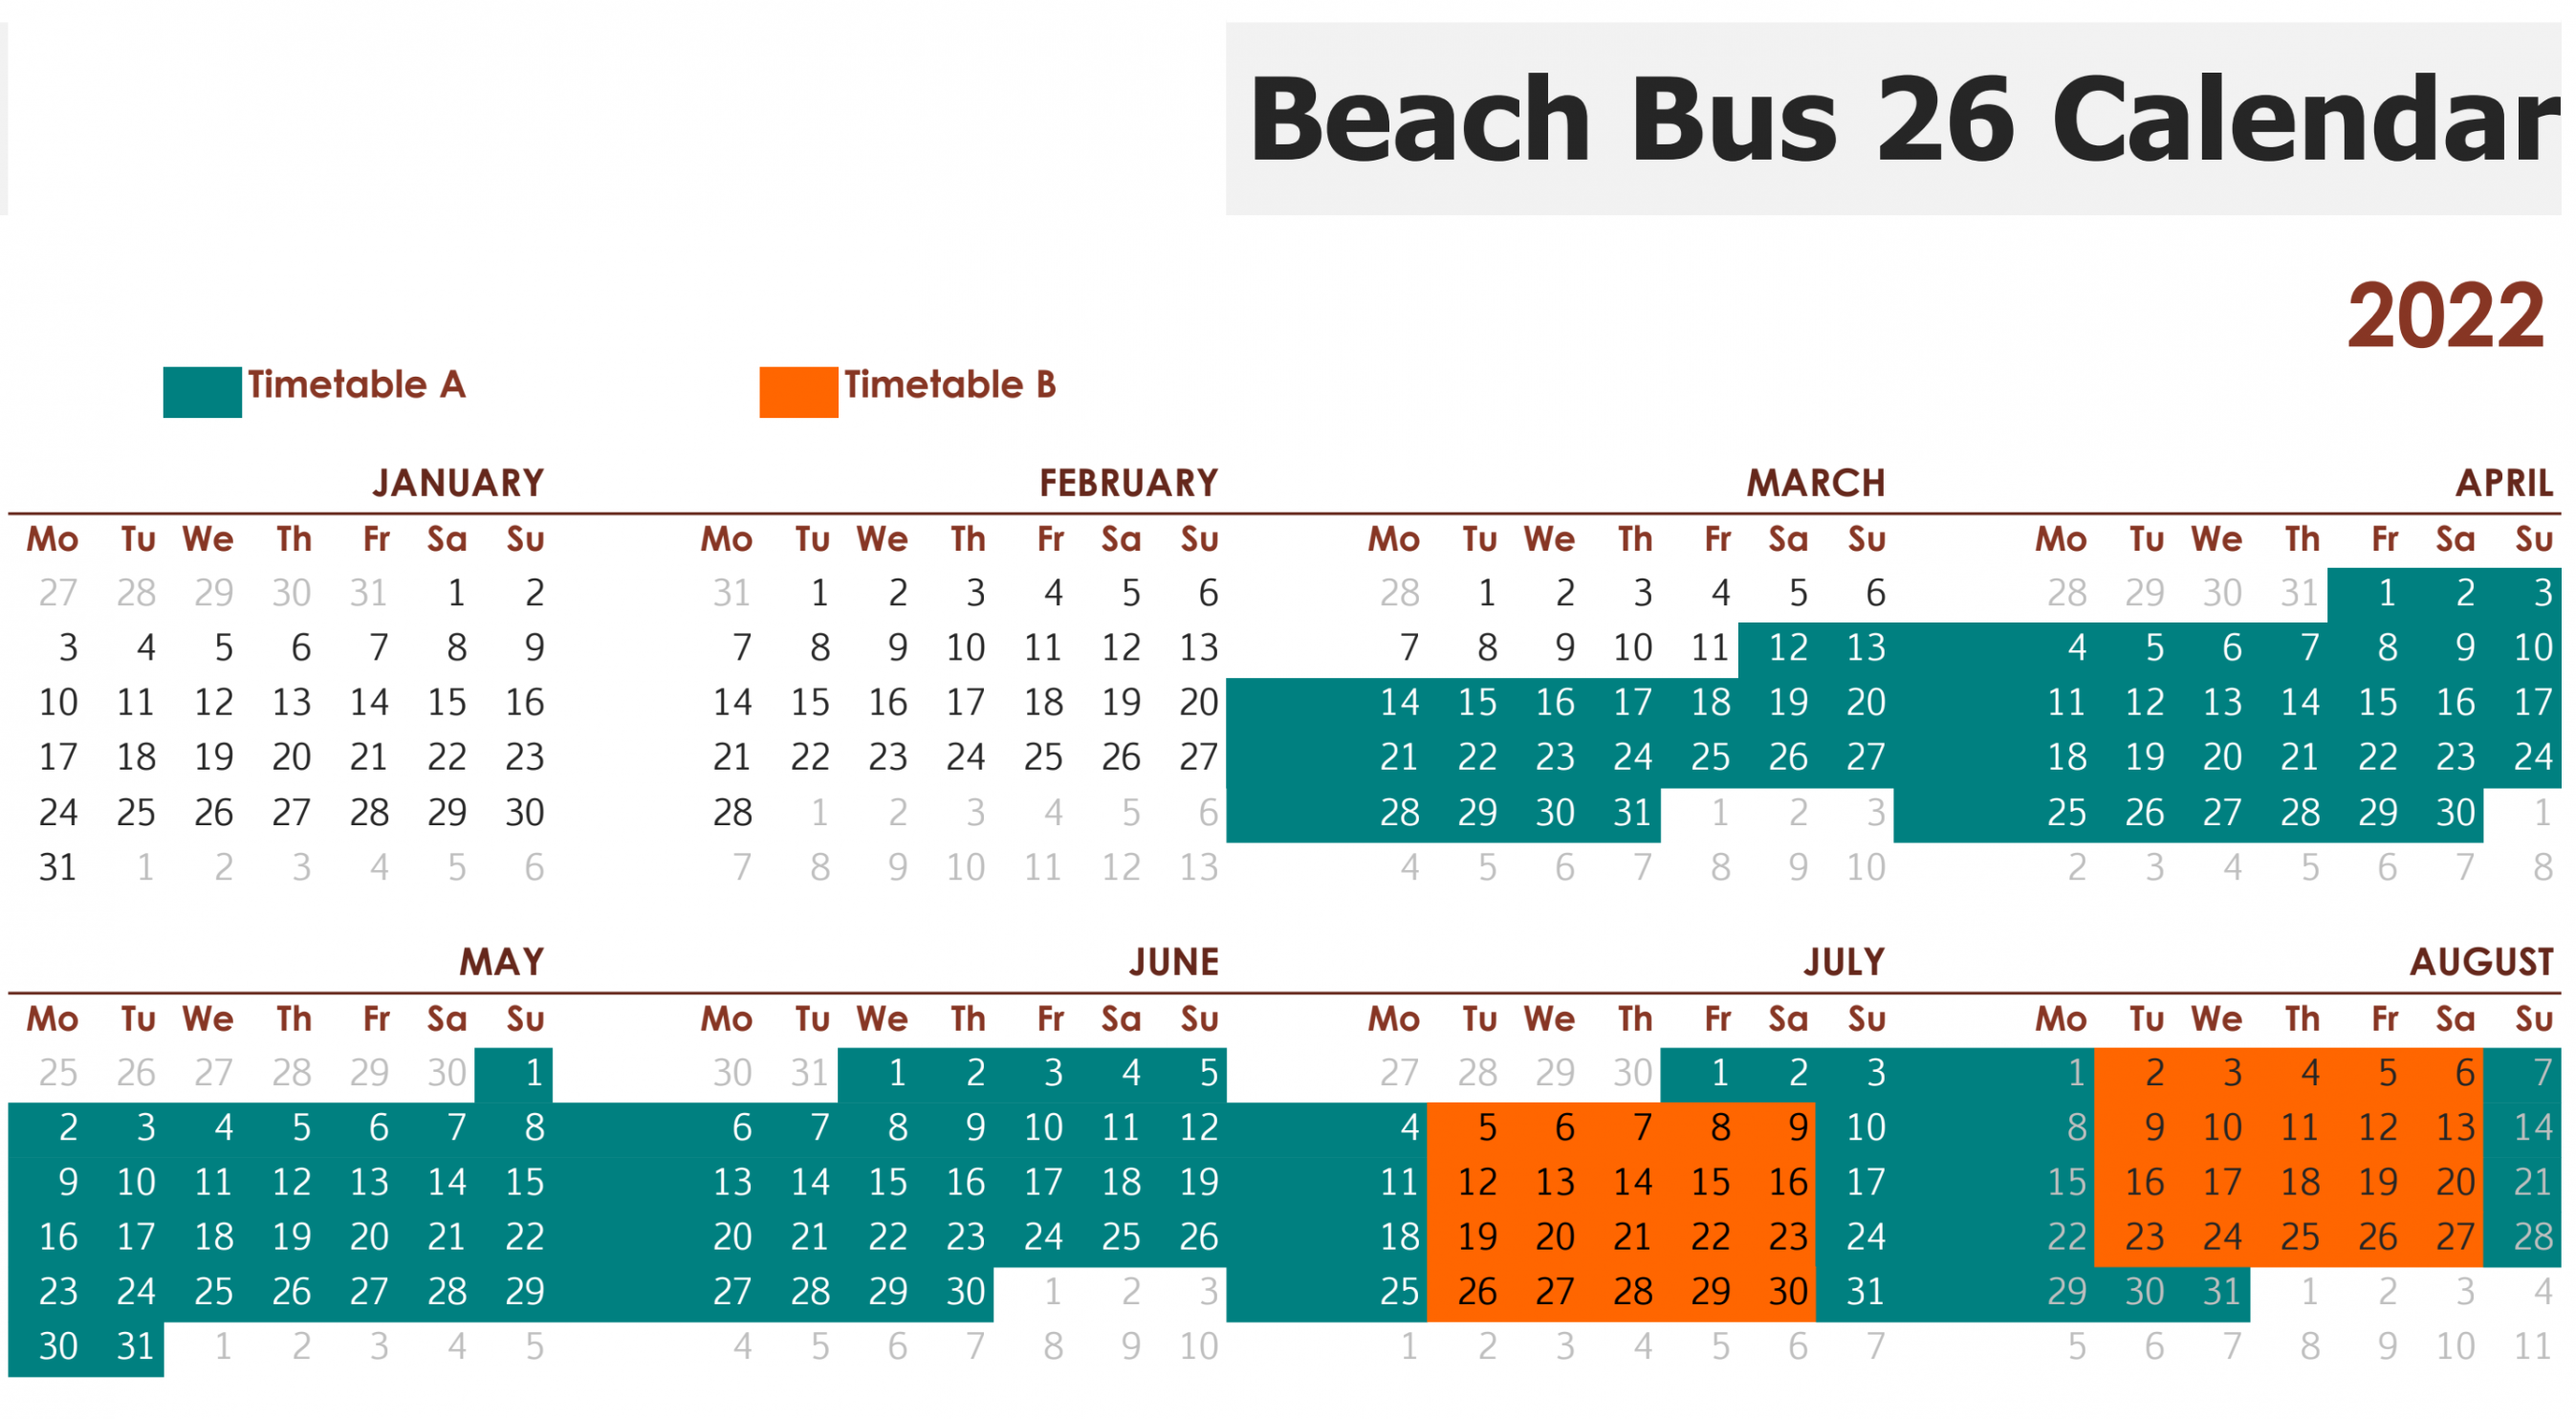 Beach Bus 26 Calendar Jan - Aug